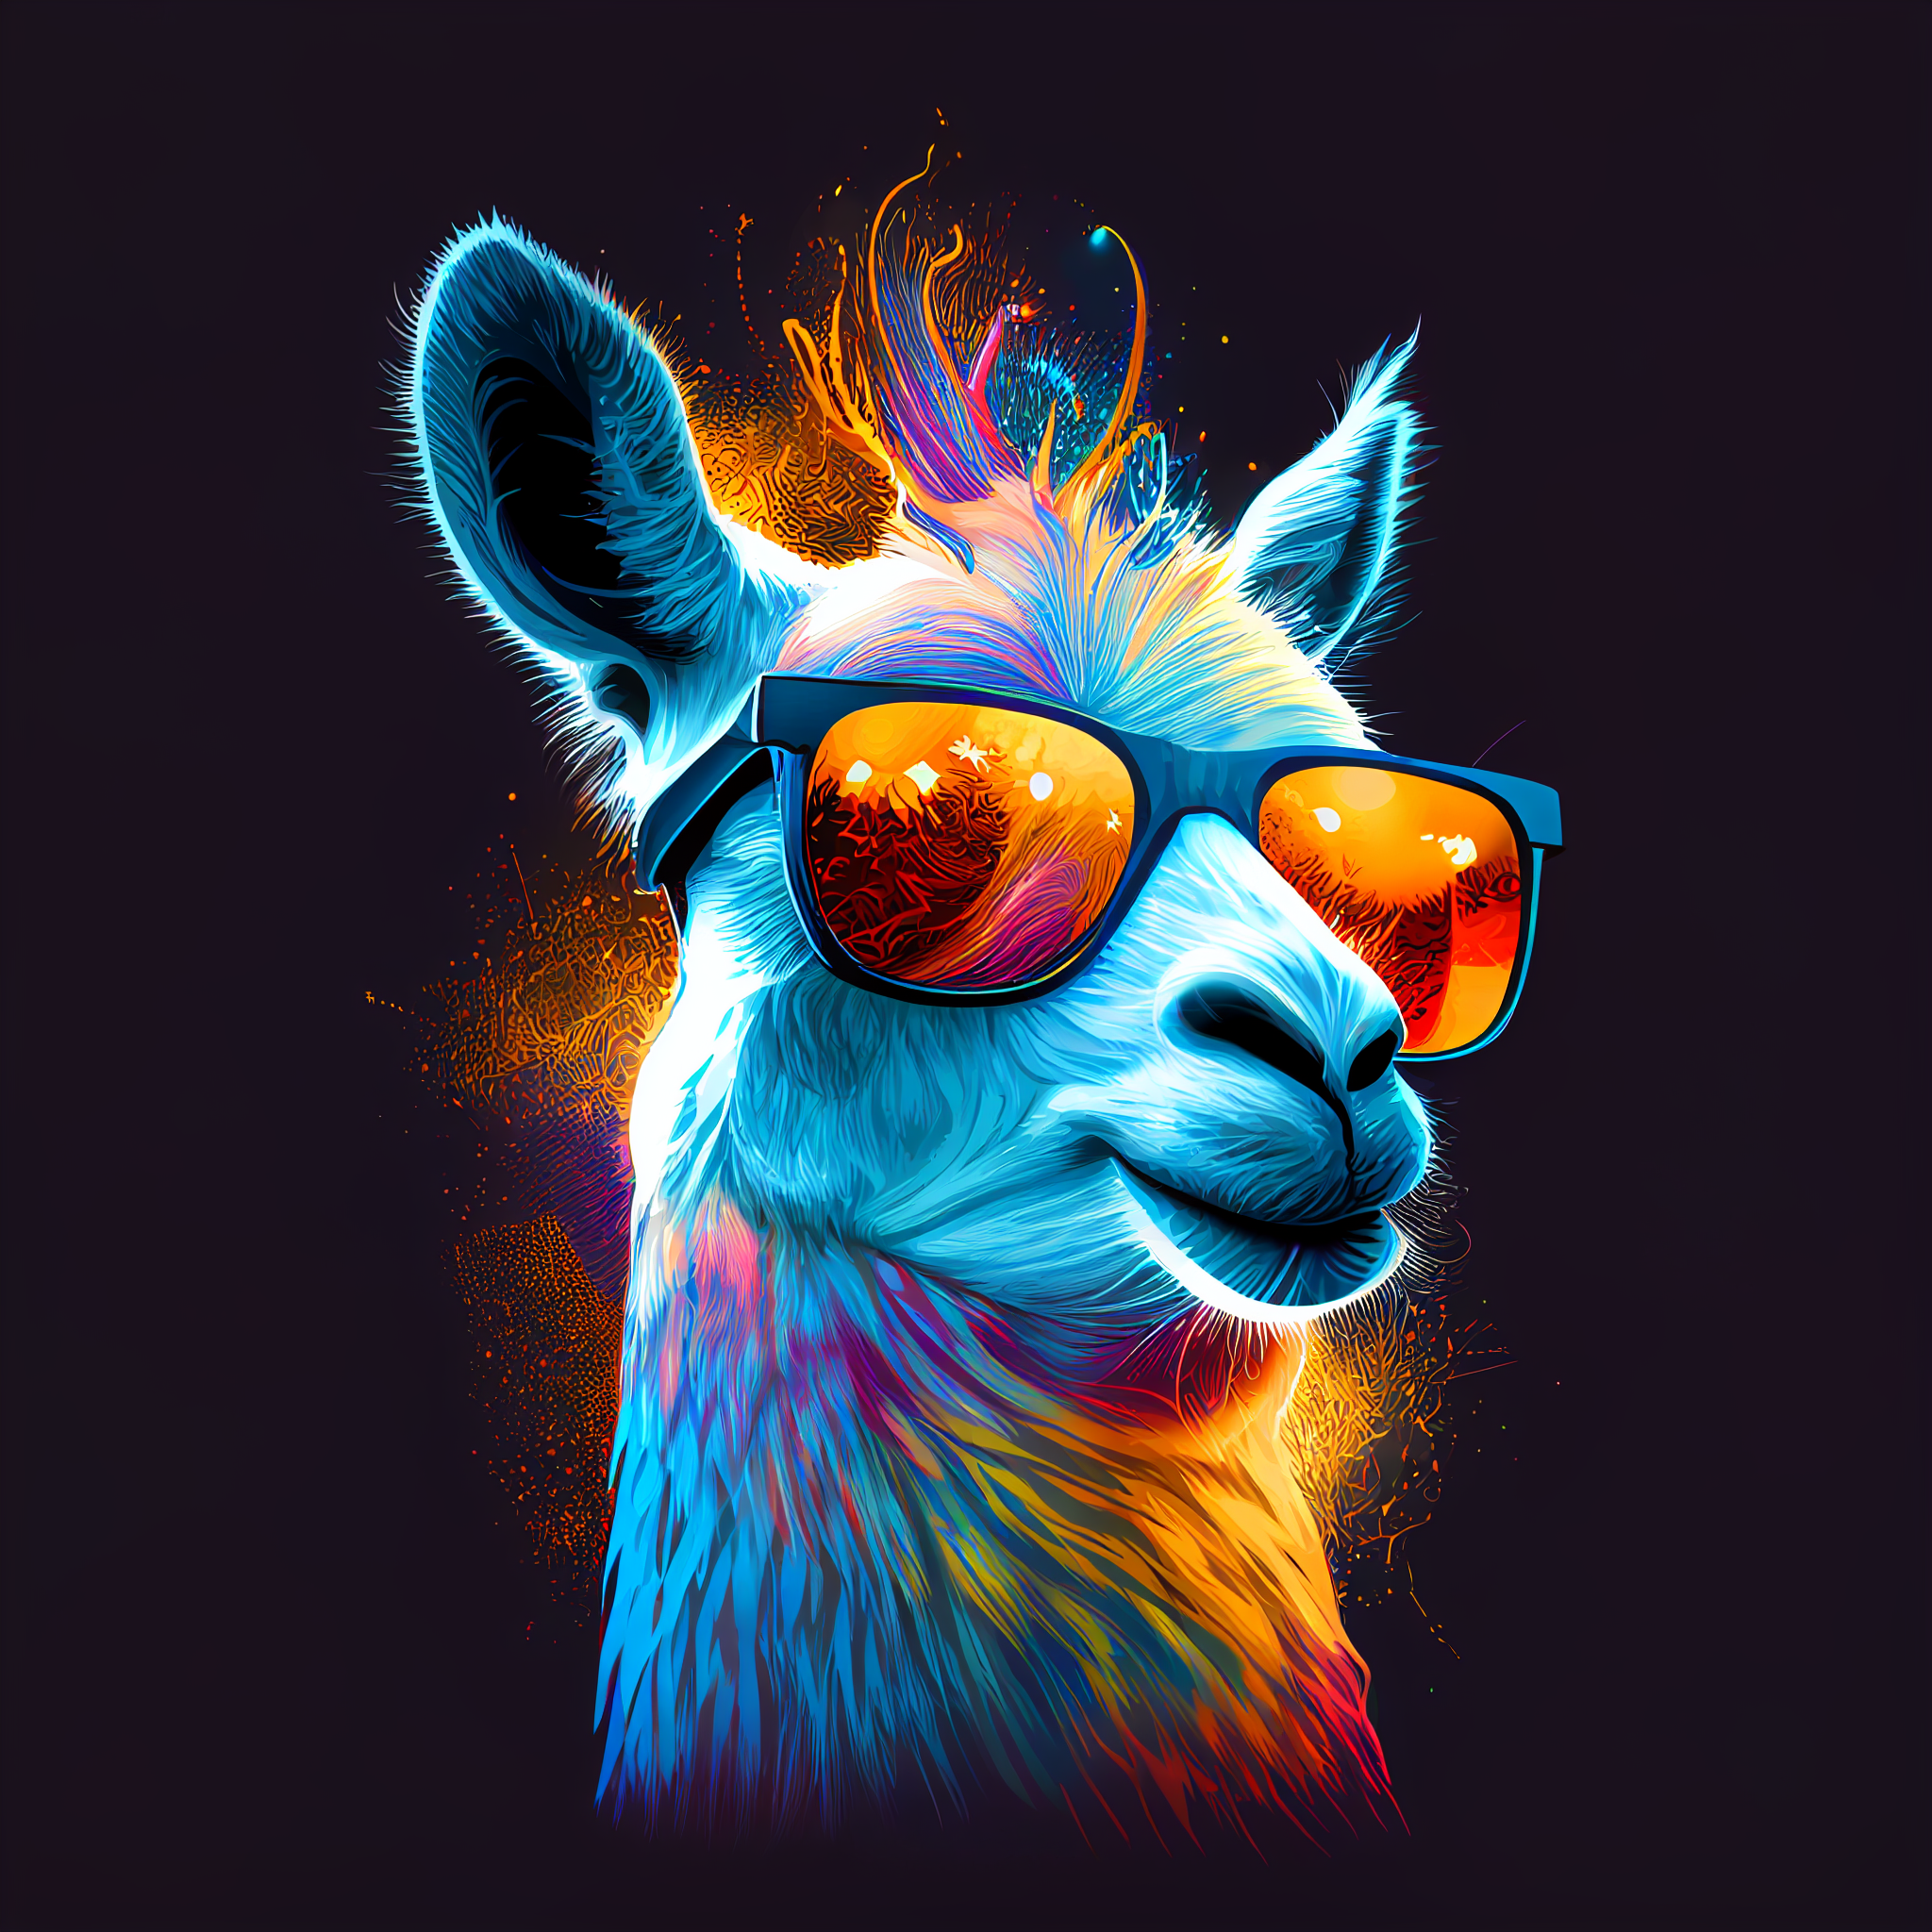 profile image of a Llama wearing sunglasses